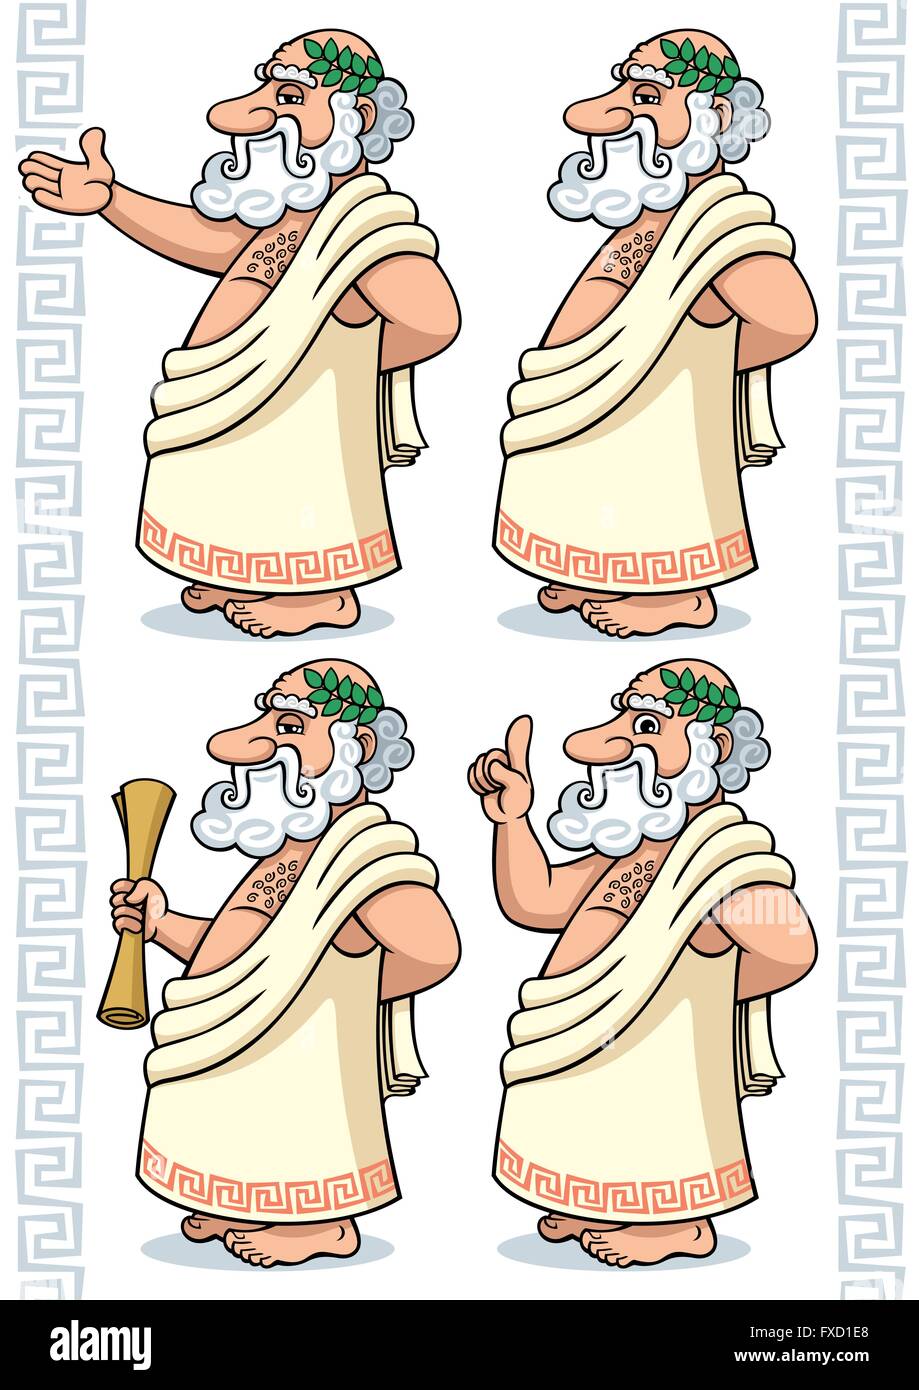 Cartoon Greek philosopher in 4 different poses. Stock Vector